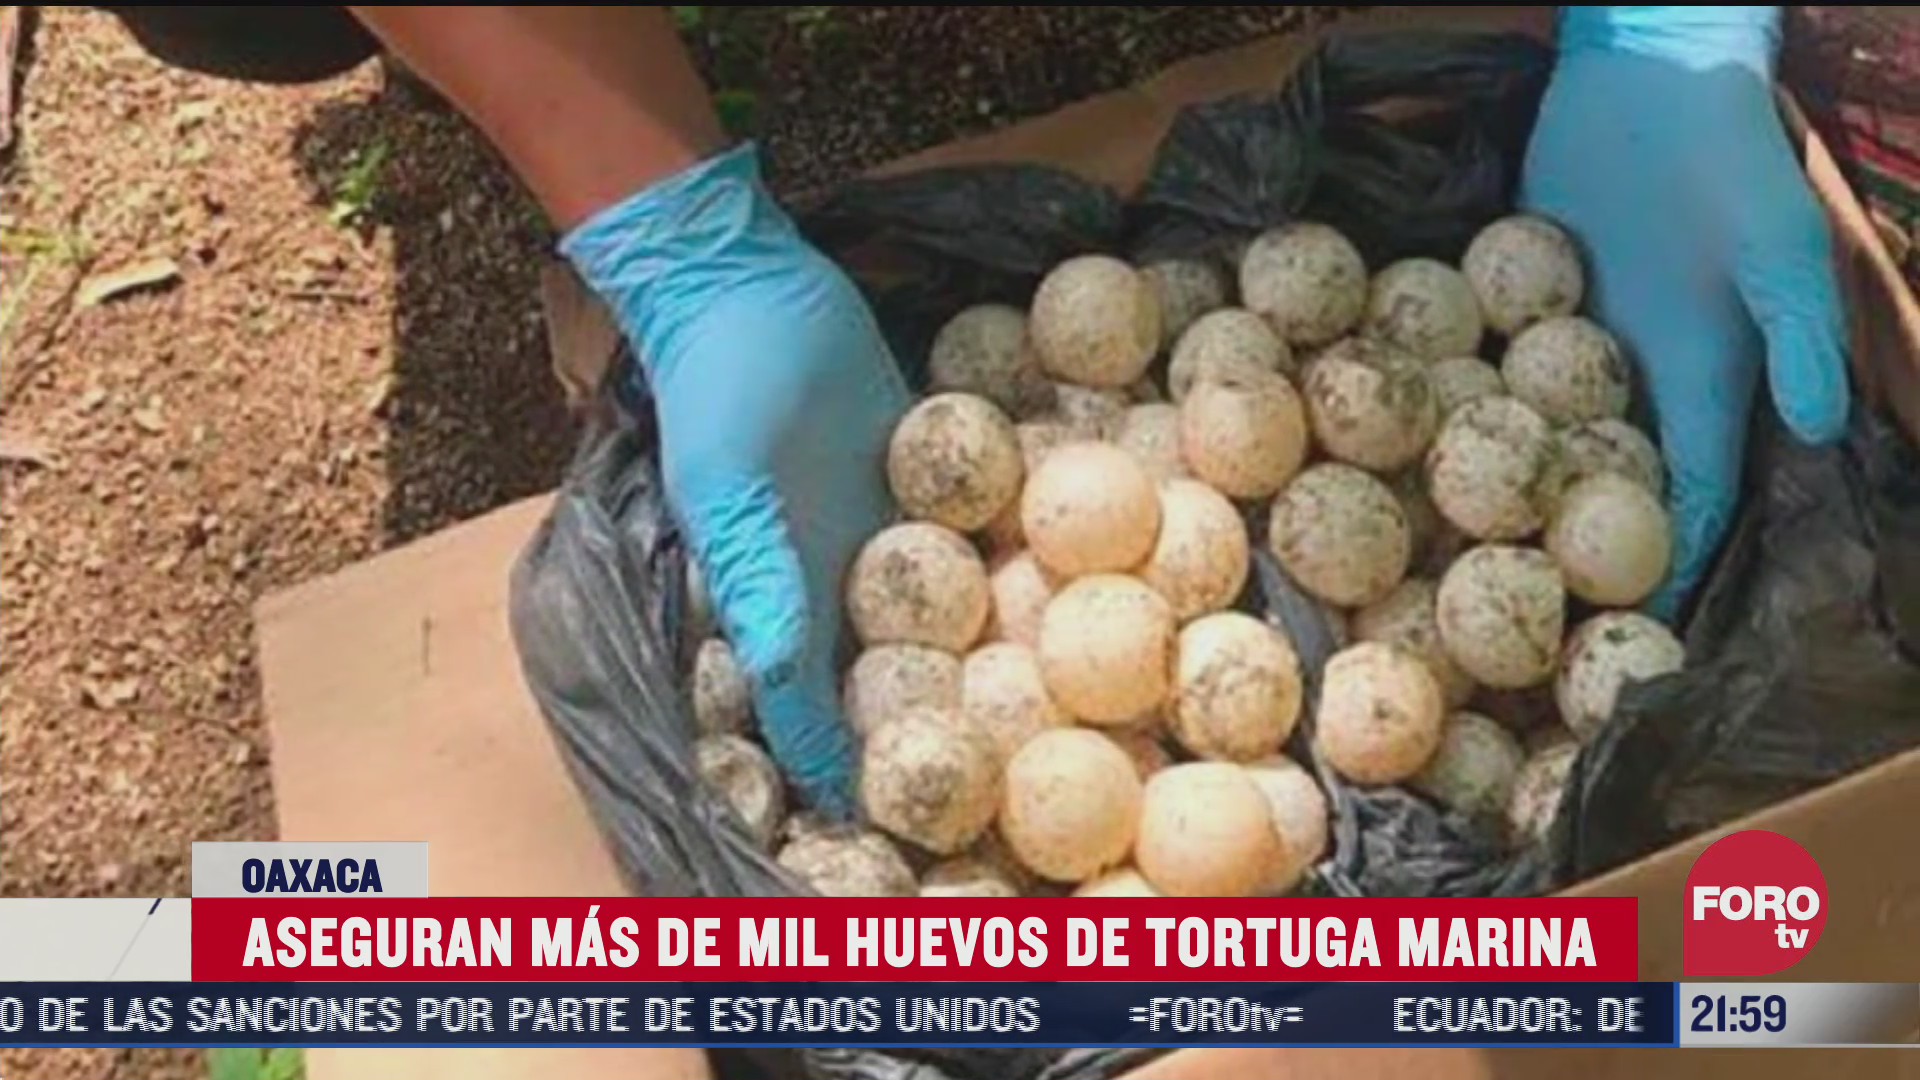 FOTO: 18 de julio 2020, guardia nacional recupera huevos de tortuga marina en oaxaca